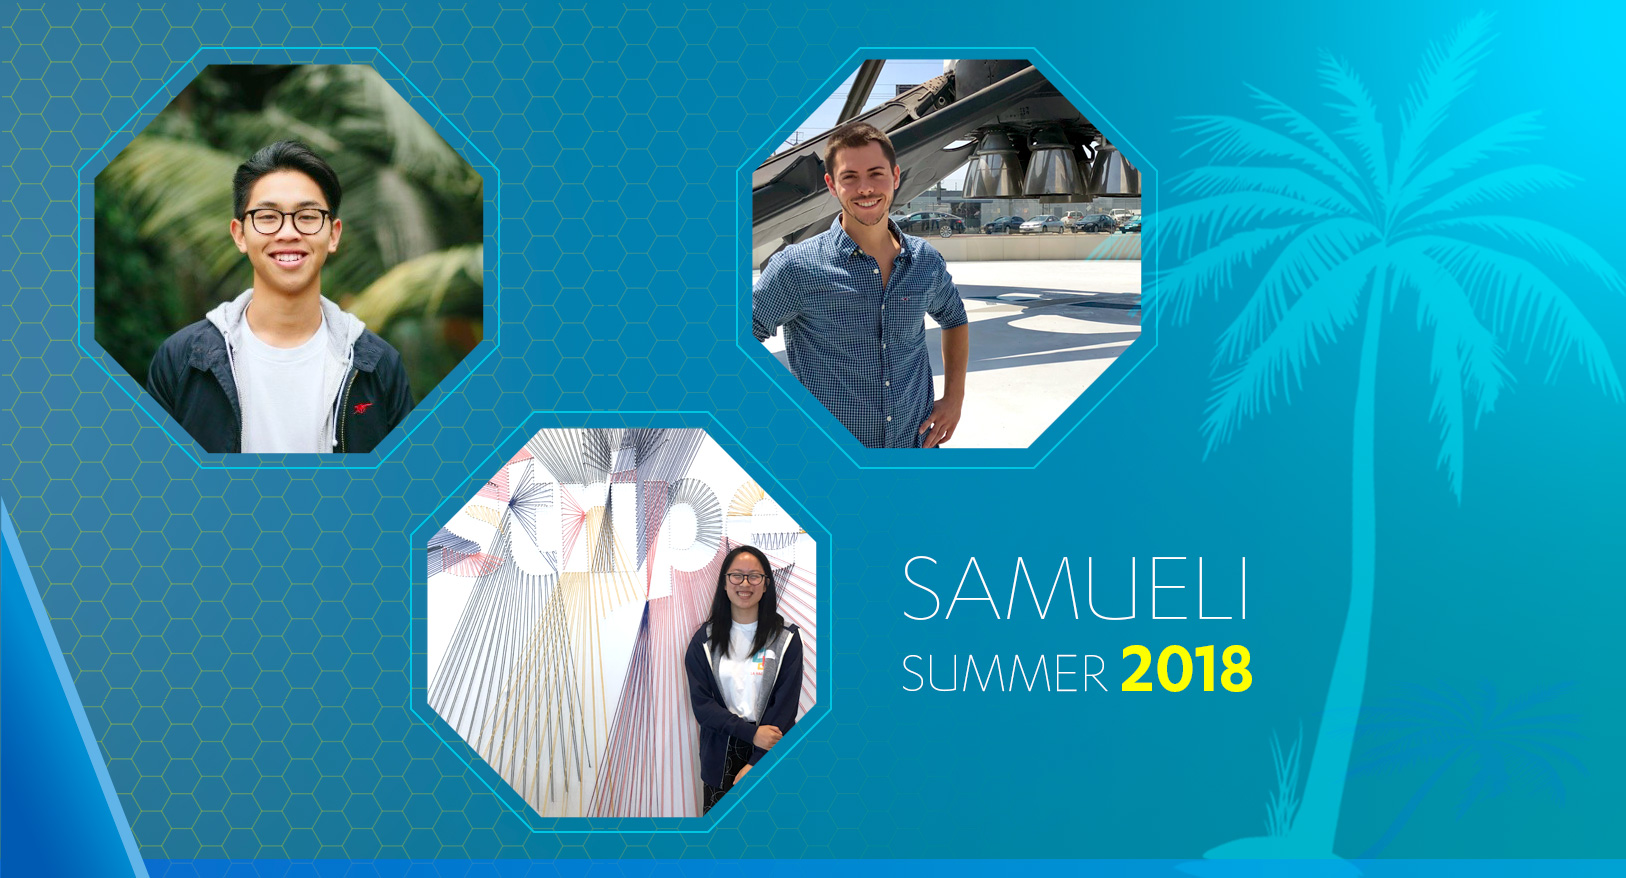 Samueli summer 2018